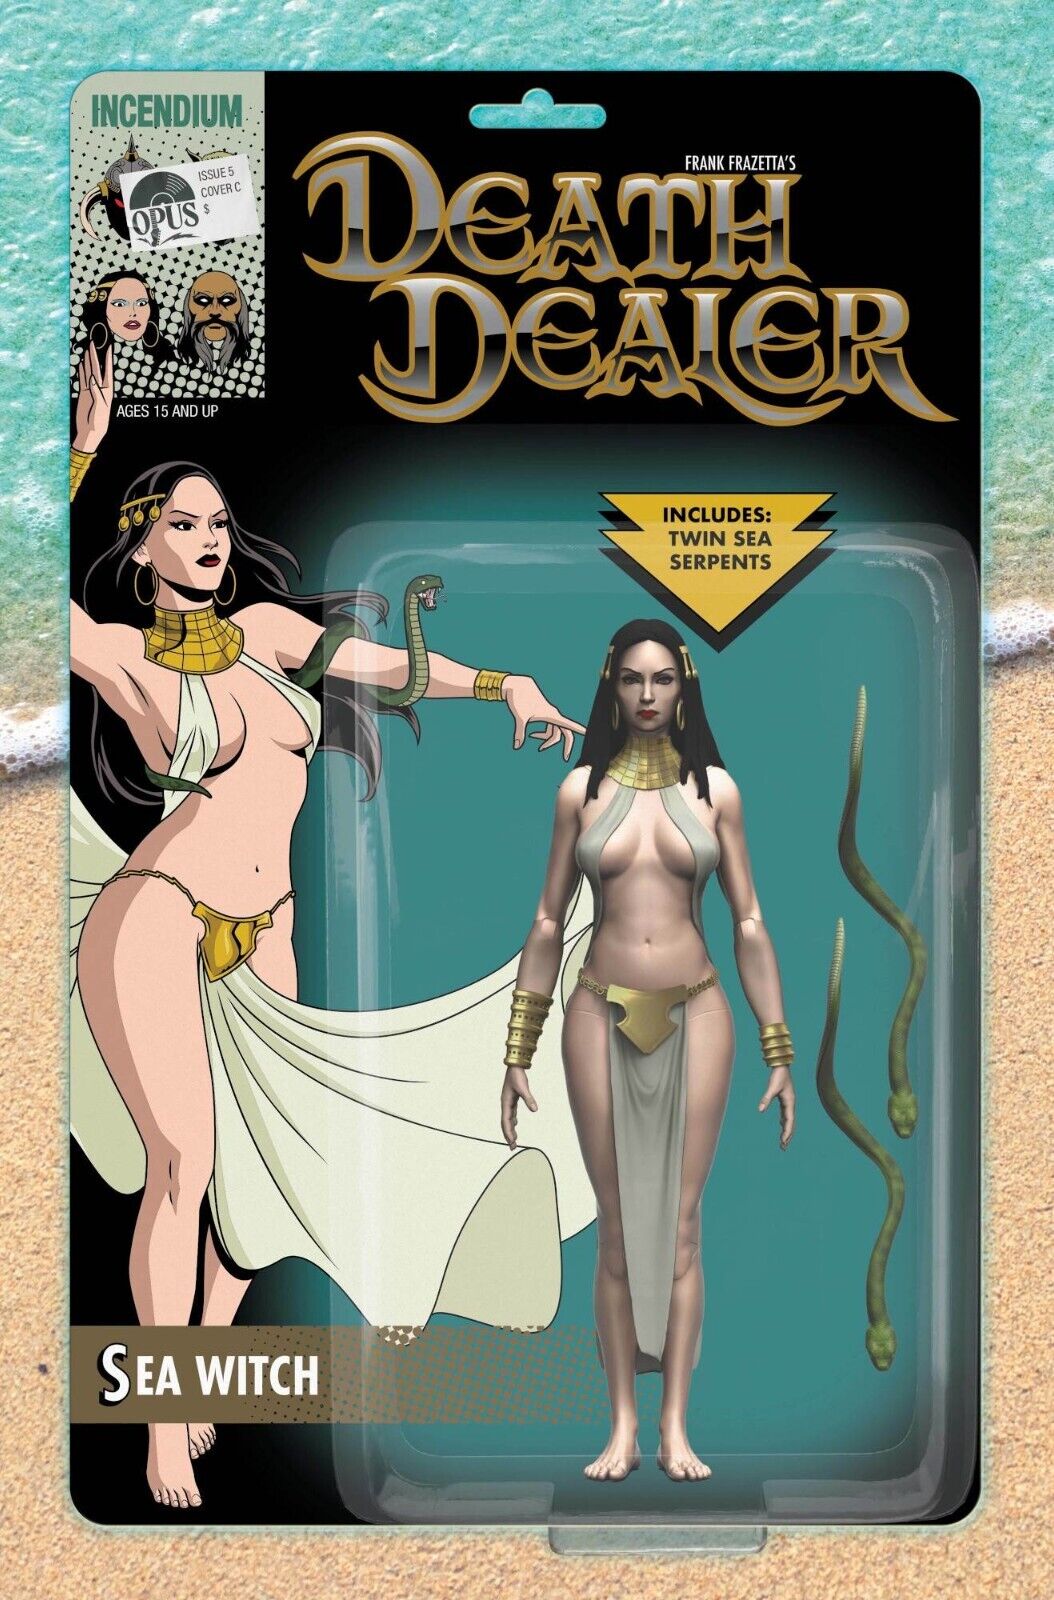 2022 Frank Frazetta's Death Dealer #5 c Opus Comics NM 1st Print Comic Book